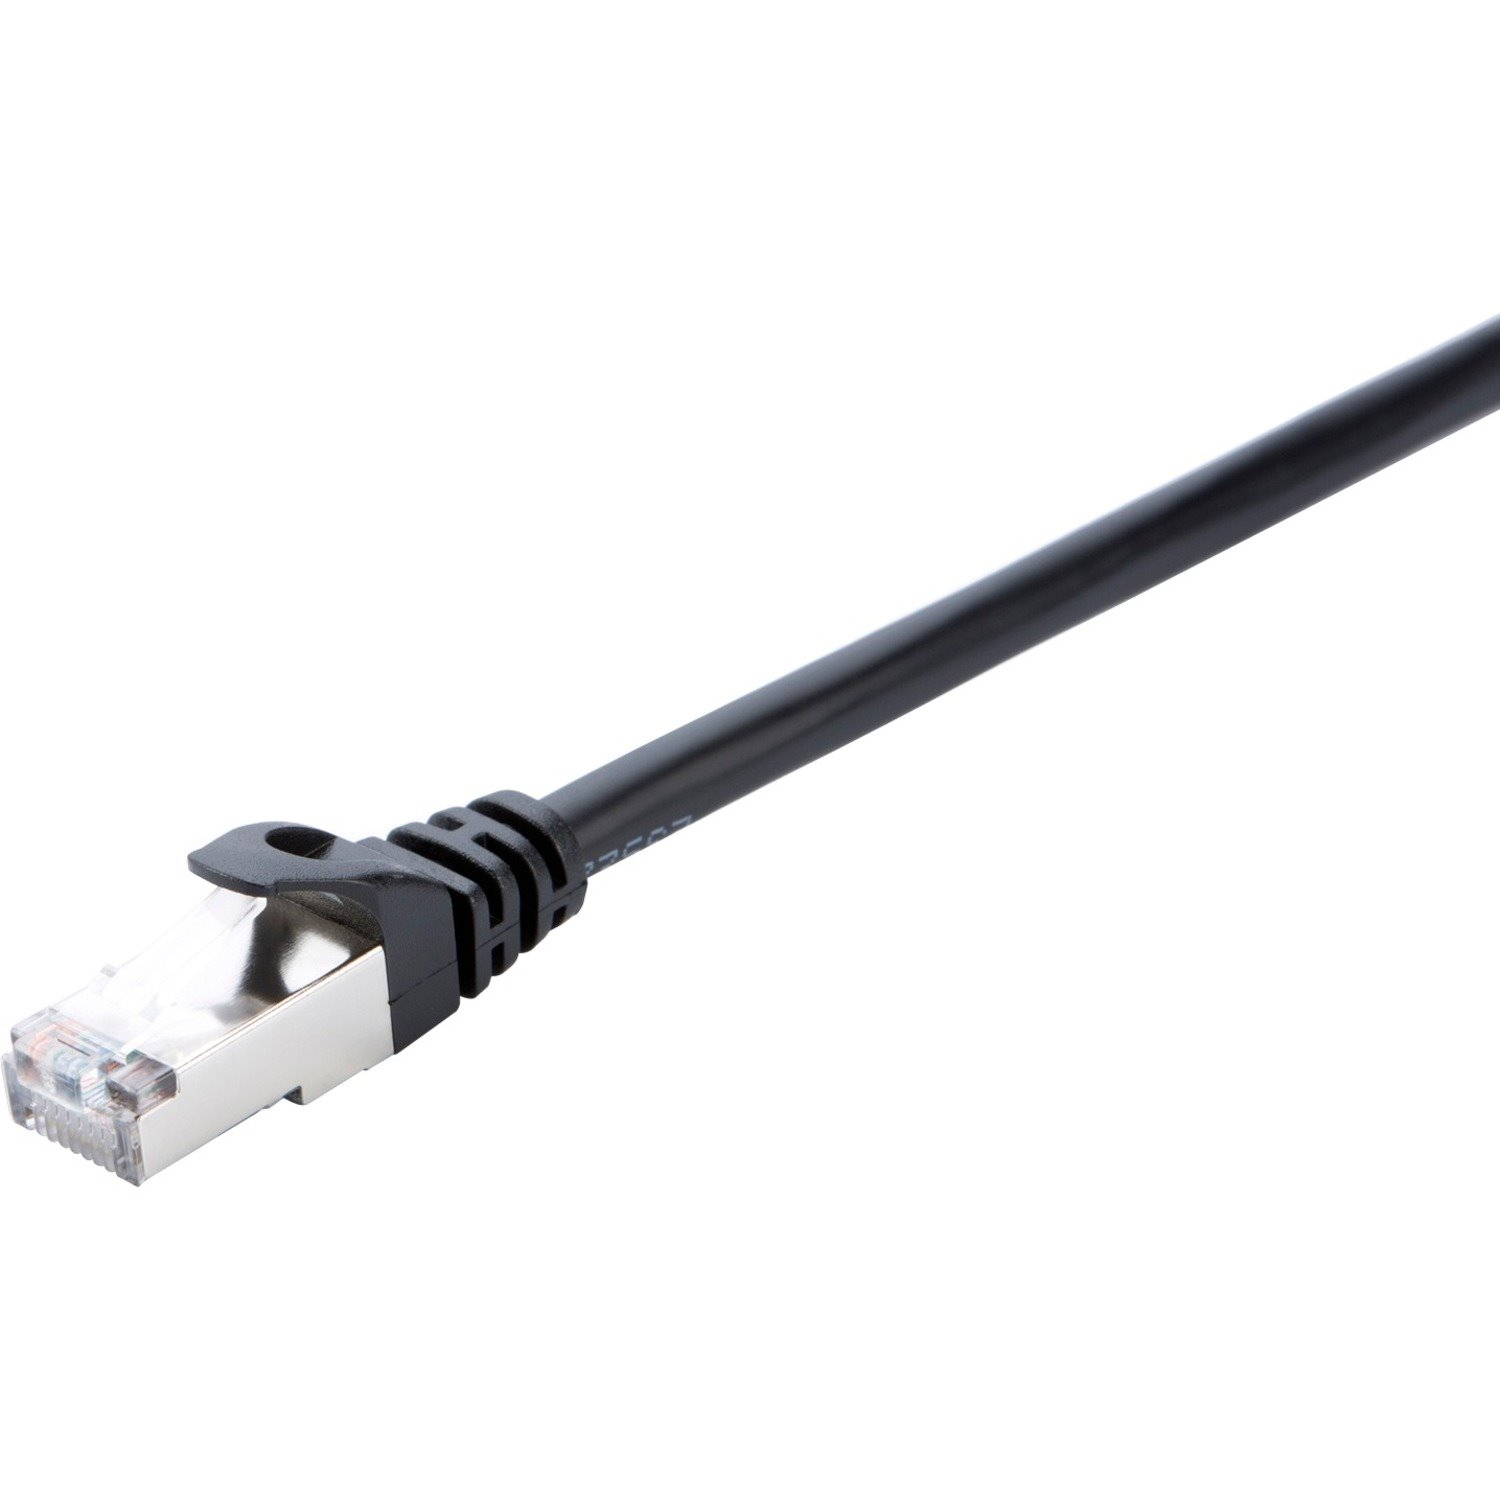 V7 Black Cat6 Shielded (STP) Cable RJ45 Male to RJ45 Male 2m 6.6ft